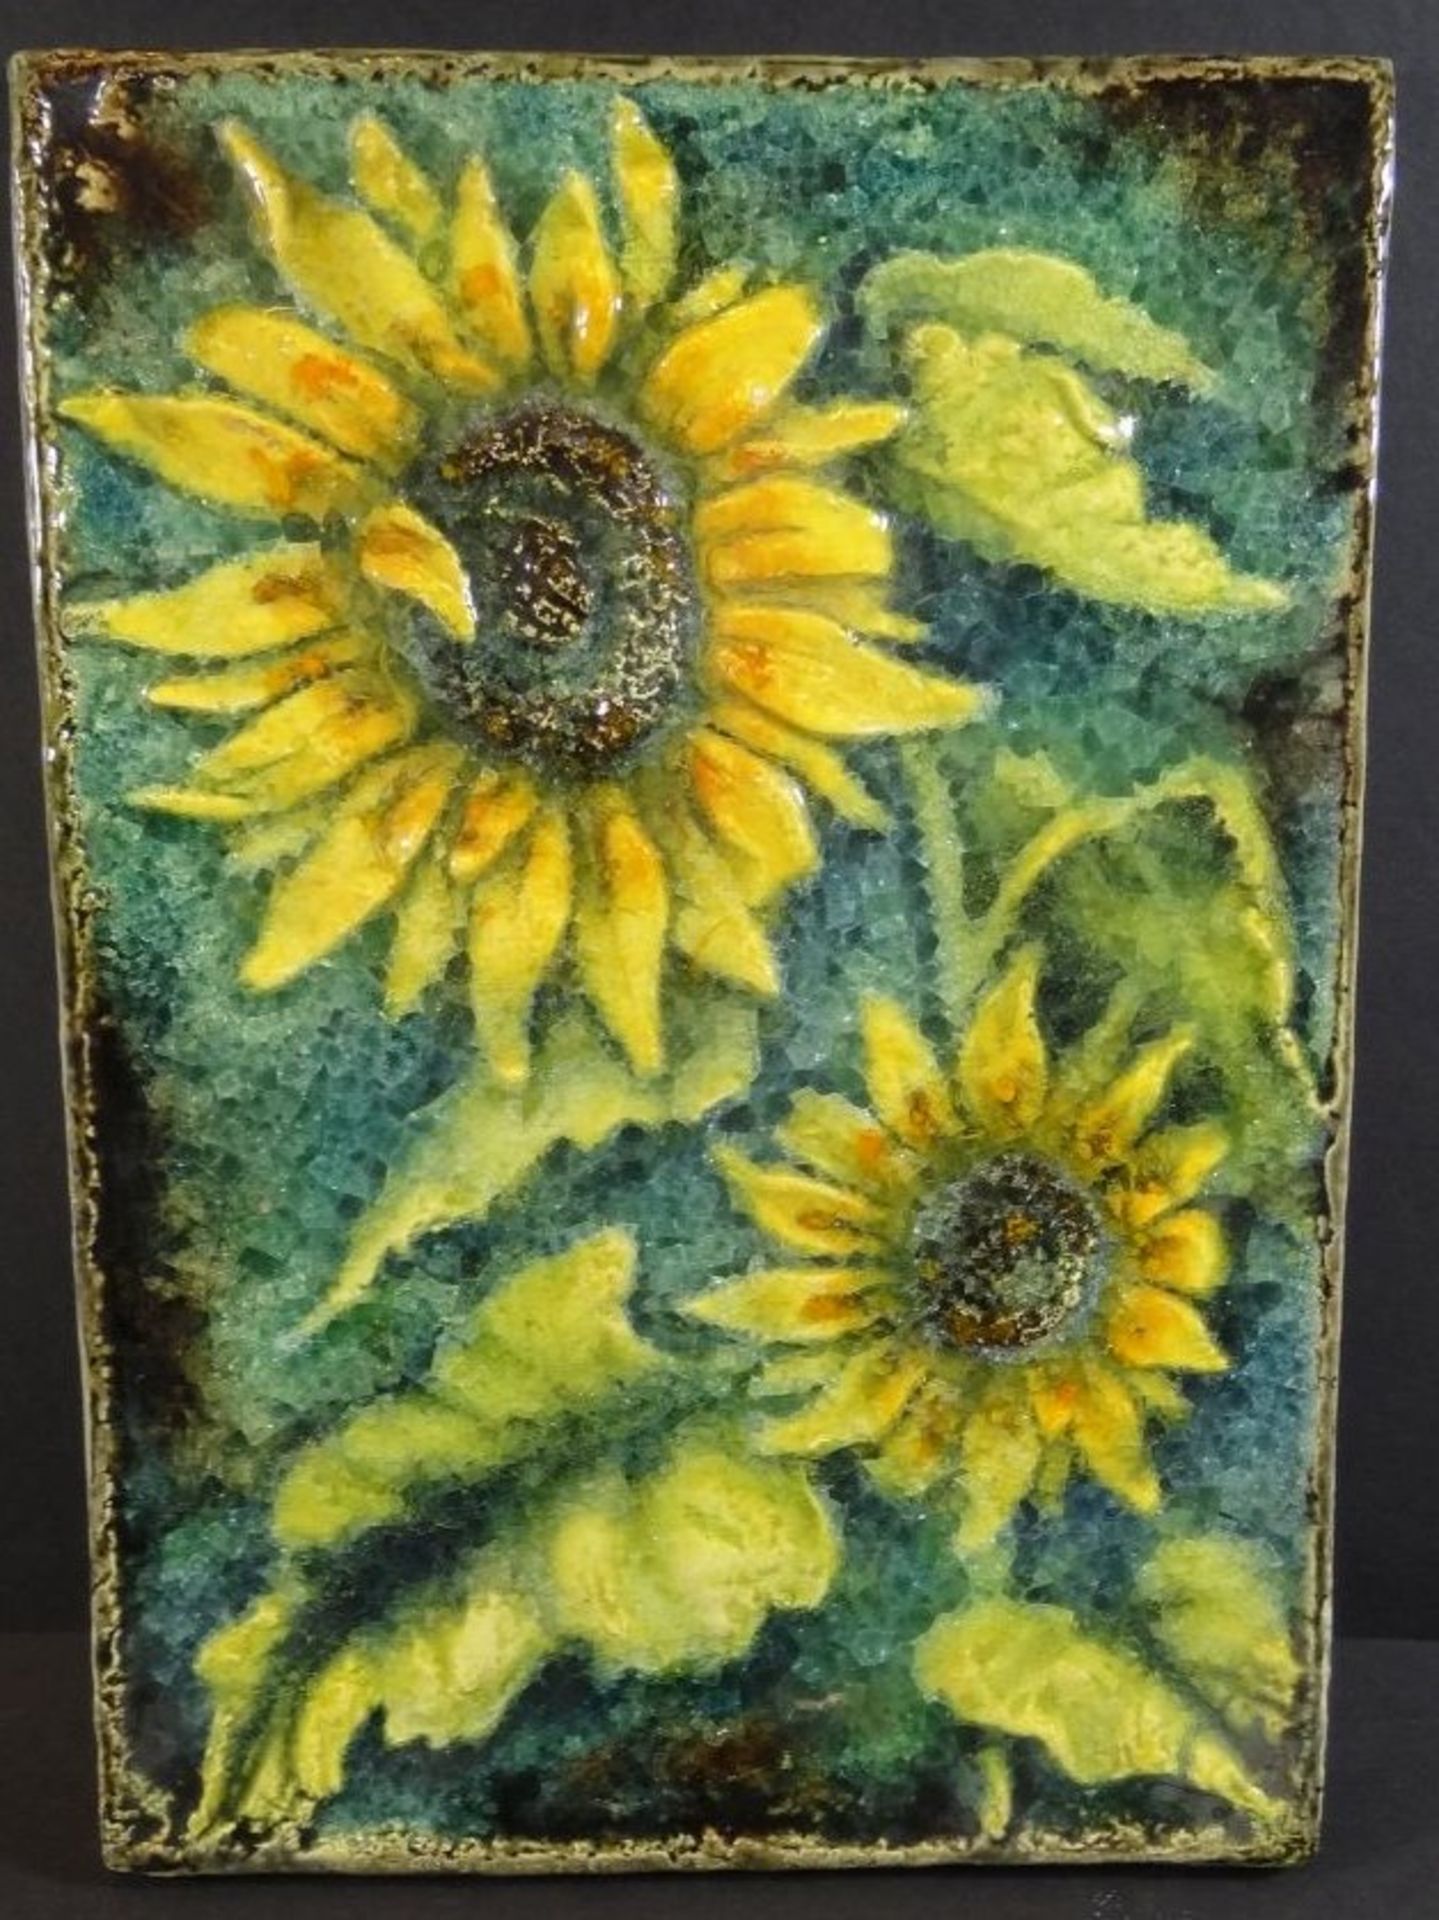 gr. Fliese "Karlsruher Majolika", mit Sonnenblumen, 33x24 cm